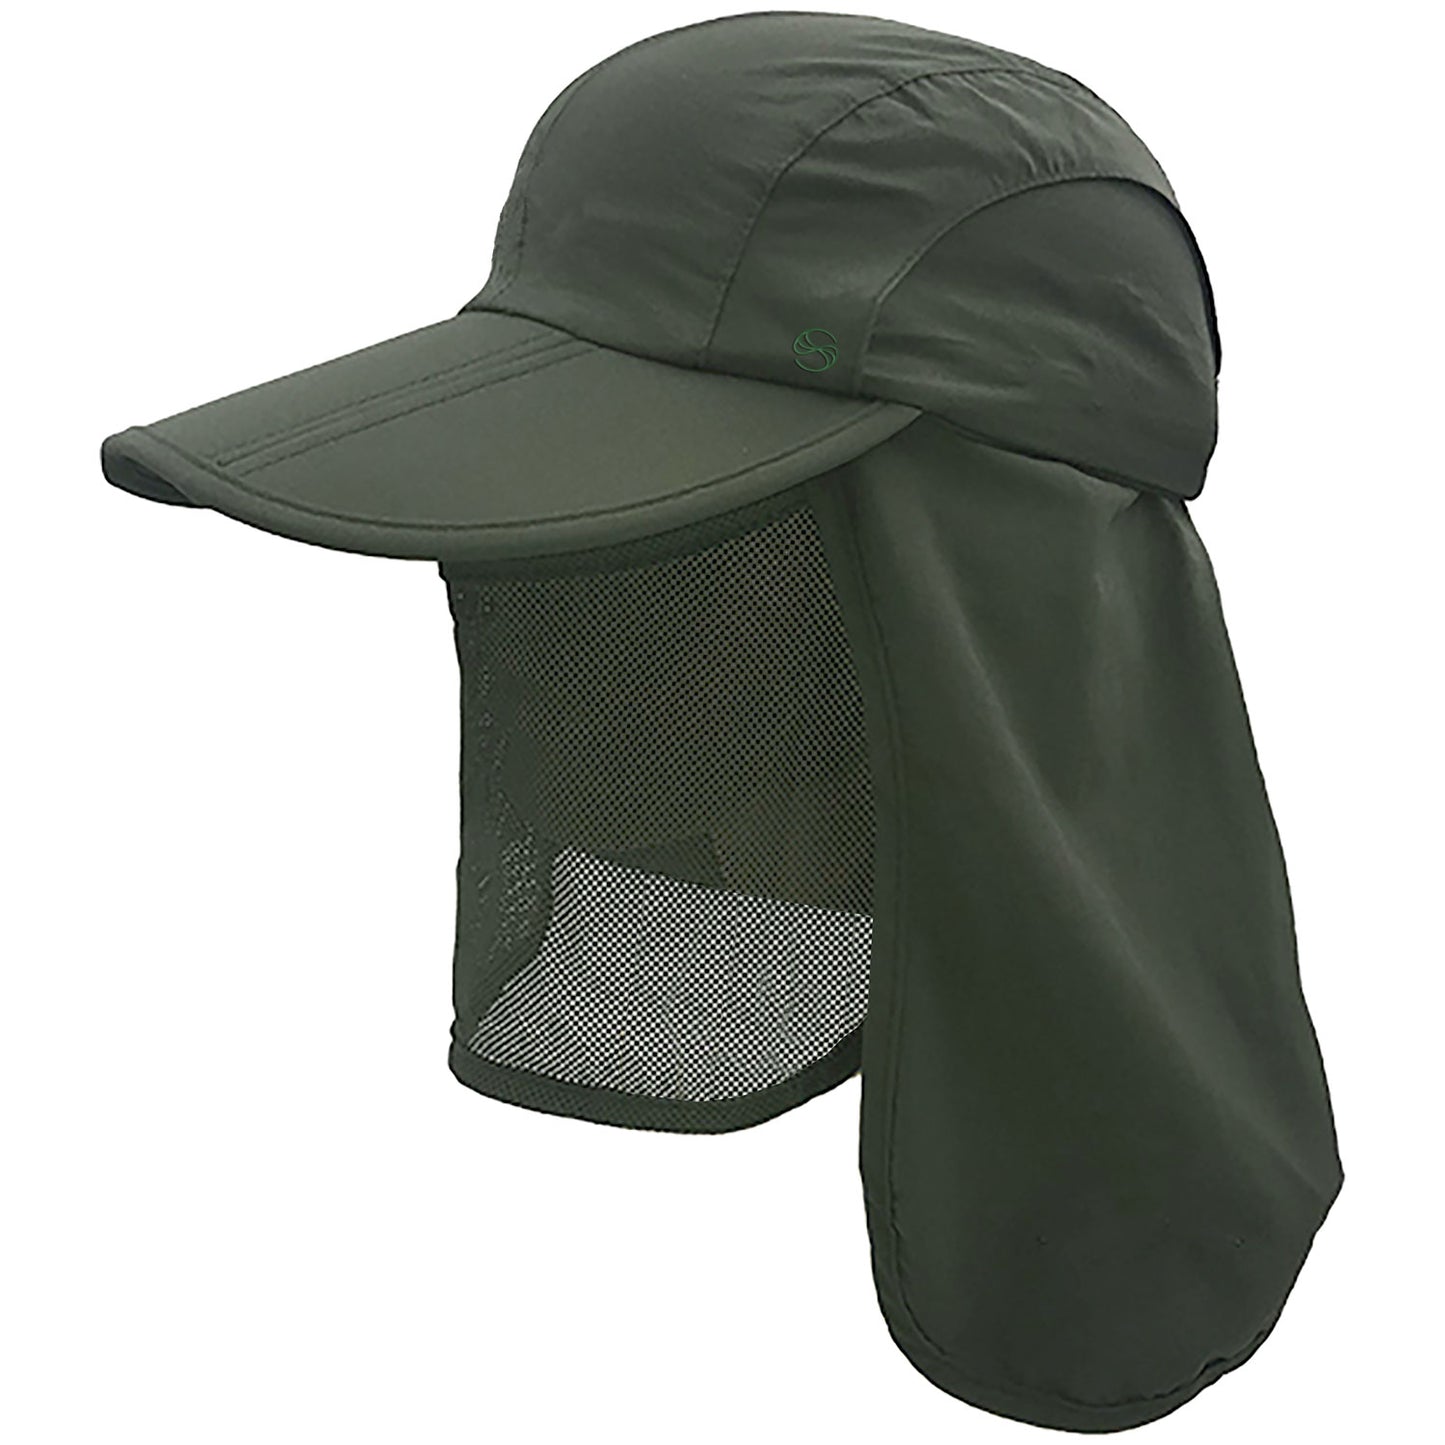 SOBEYO Outdoor Snap Hats Boonie Brim Ear Neck Cover Sun Cap